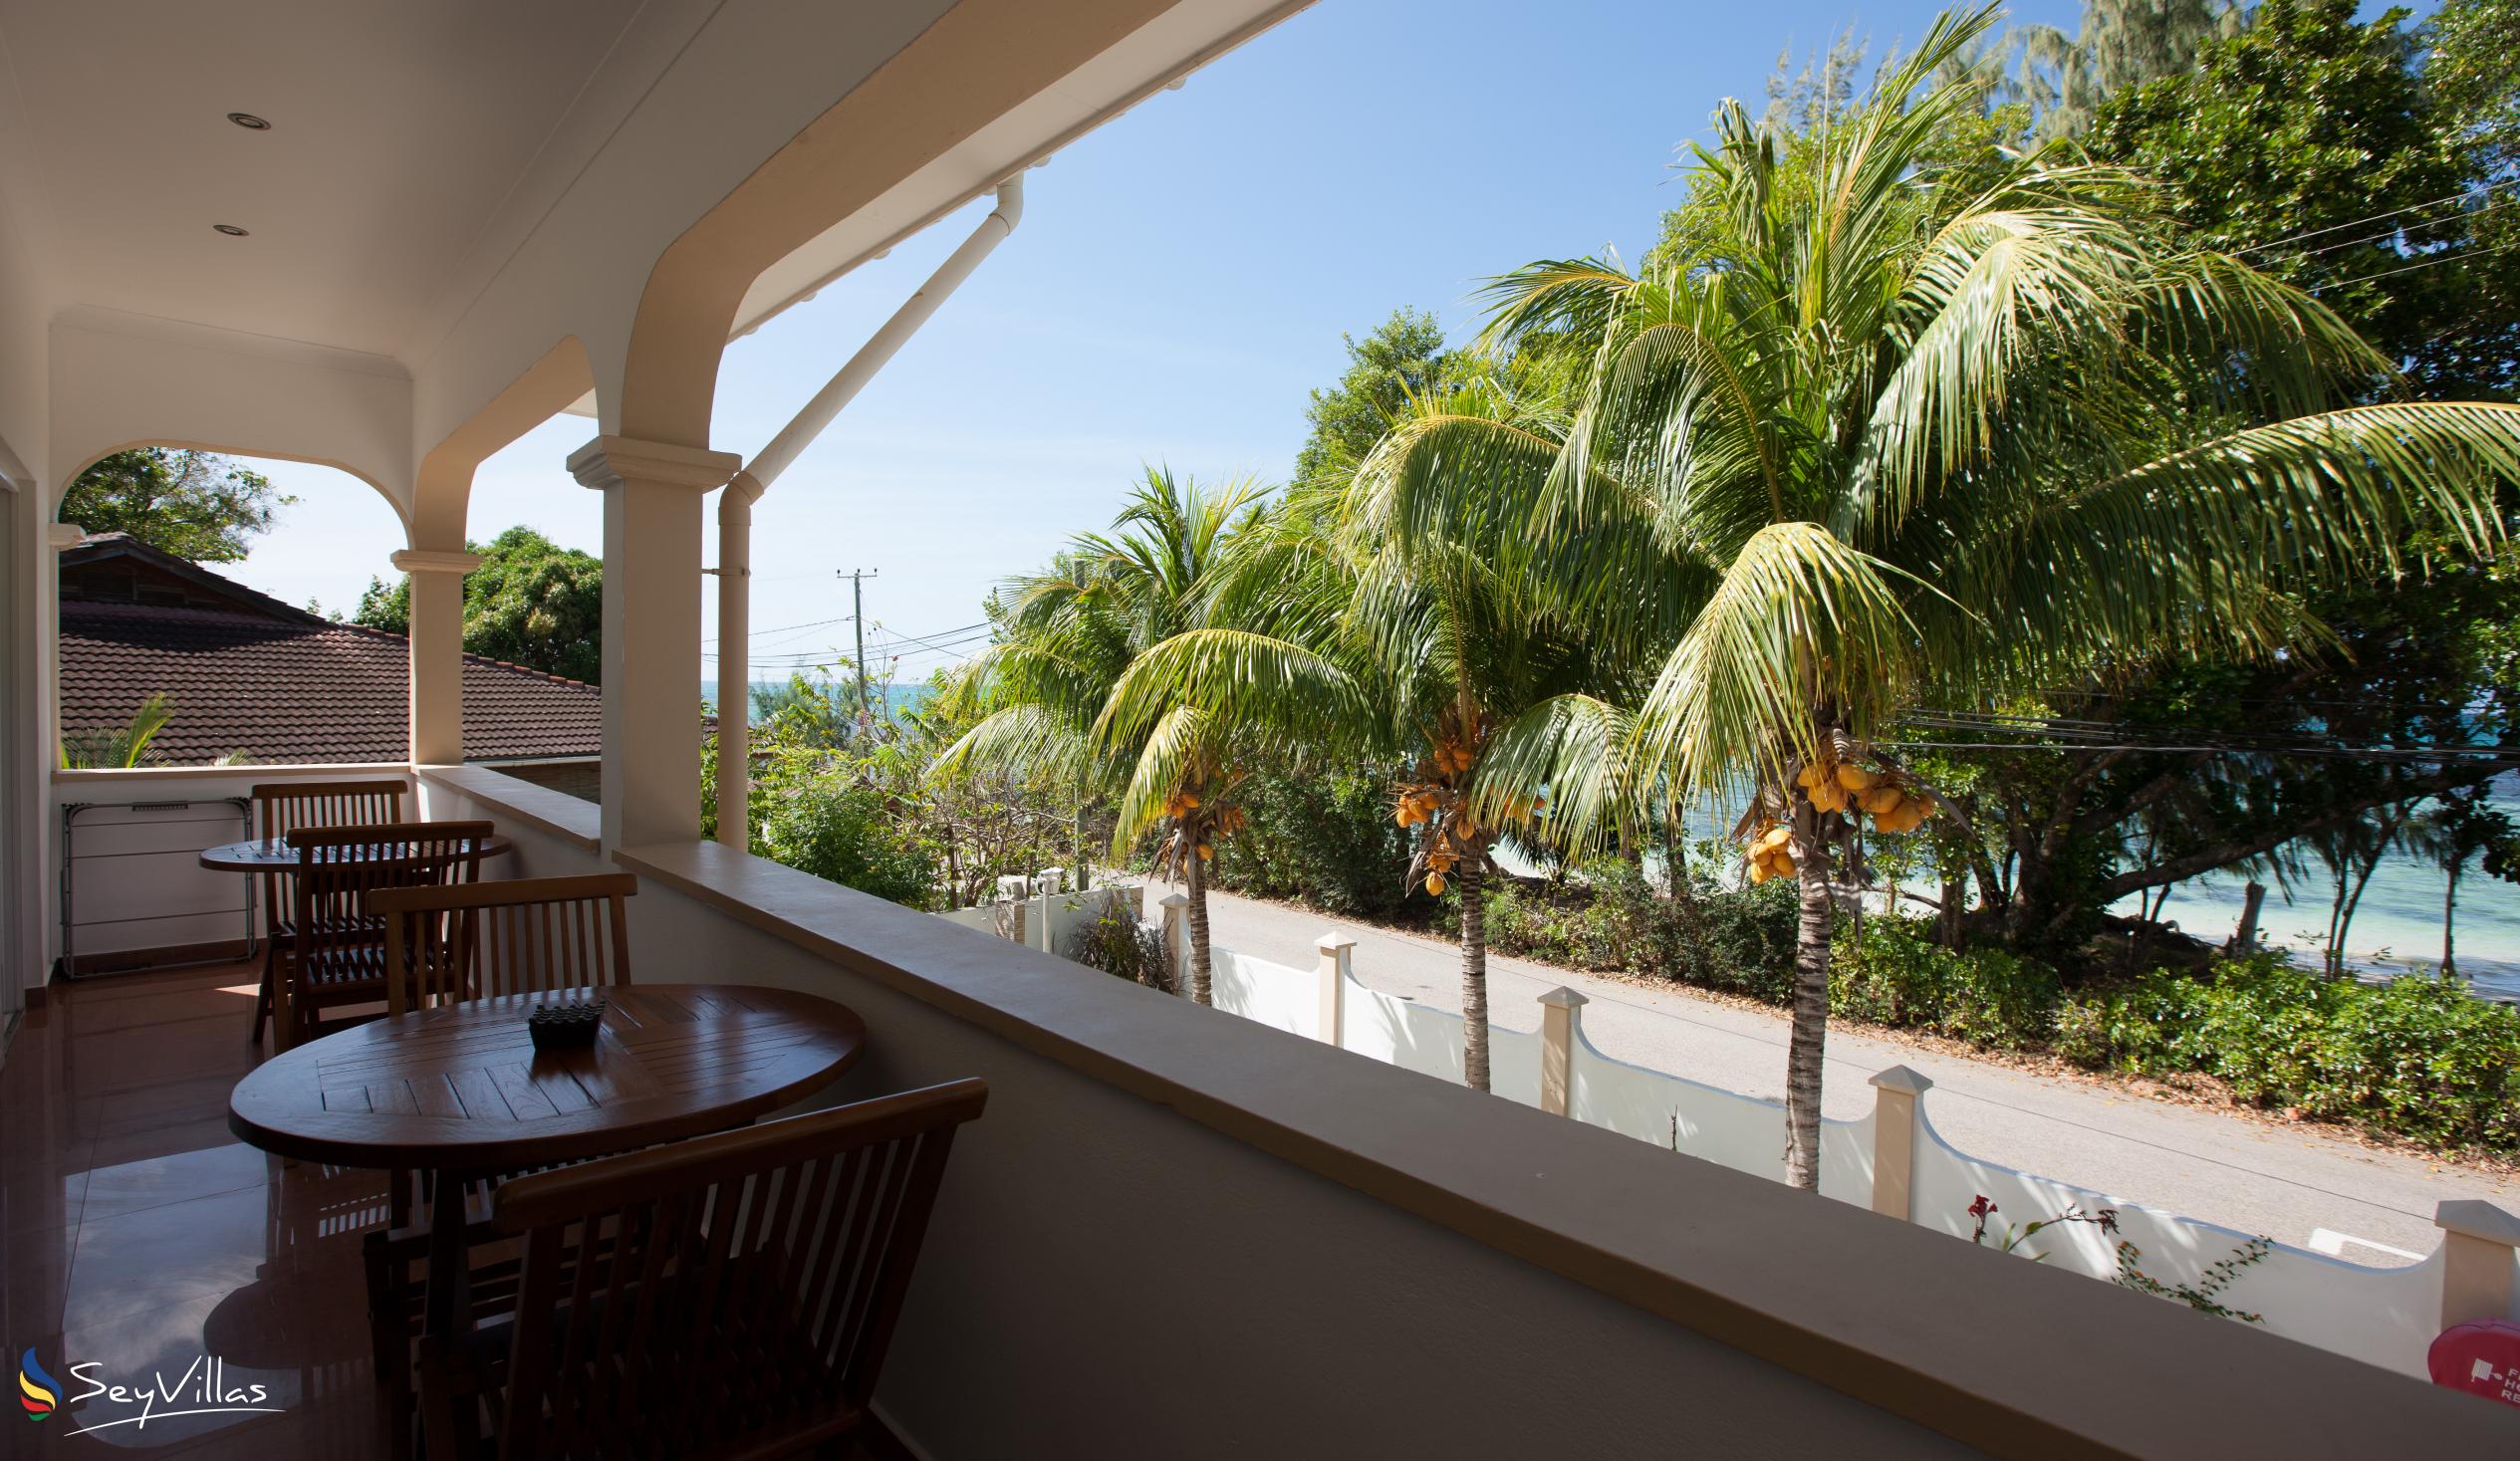 Foto 10: YASAD Luxury Beach Residence - Appartamento con 3 camere da letto - Praslin (Seychelles)